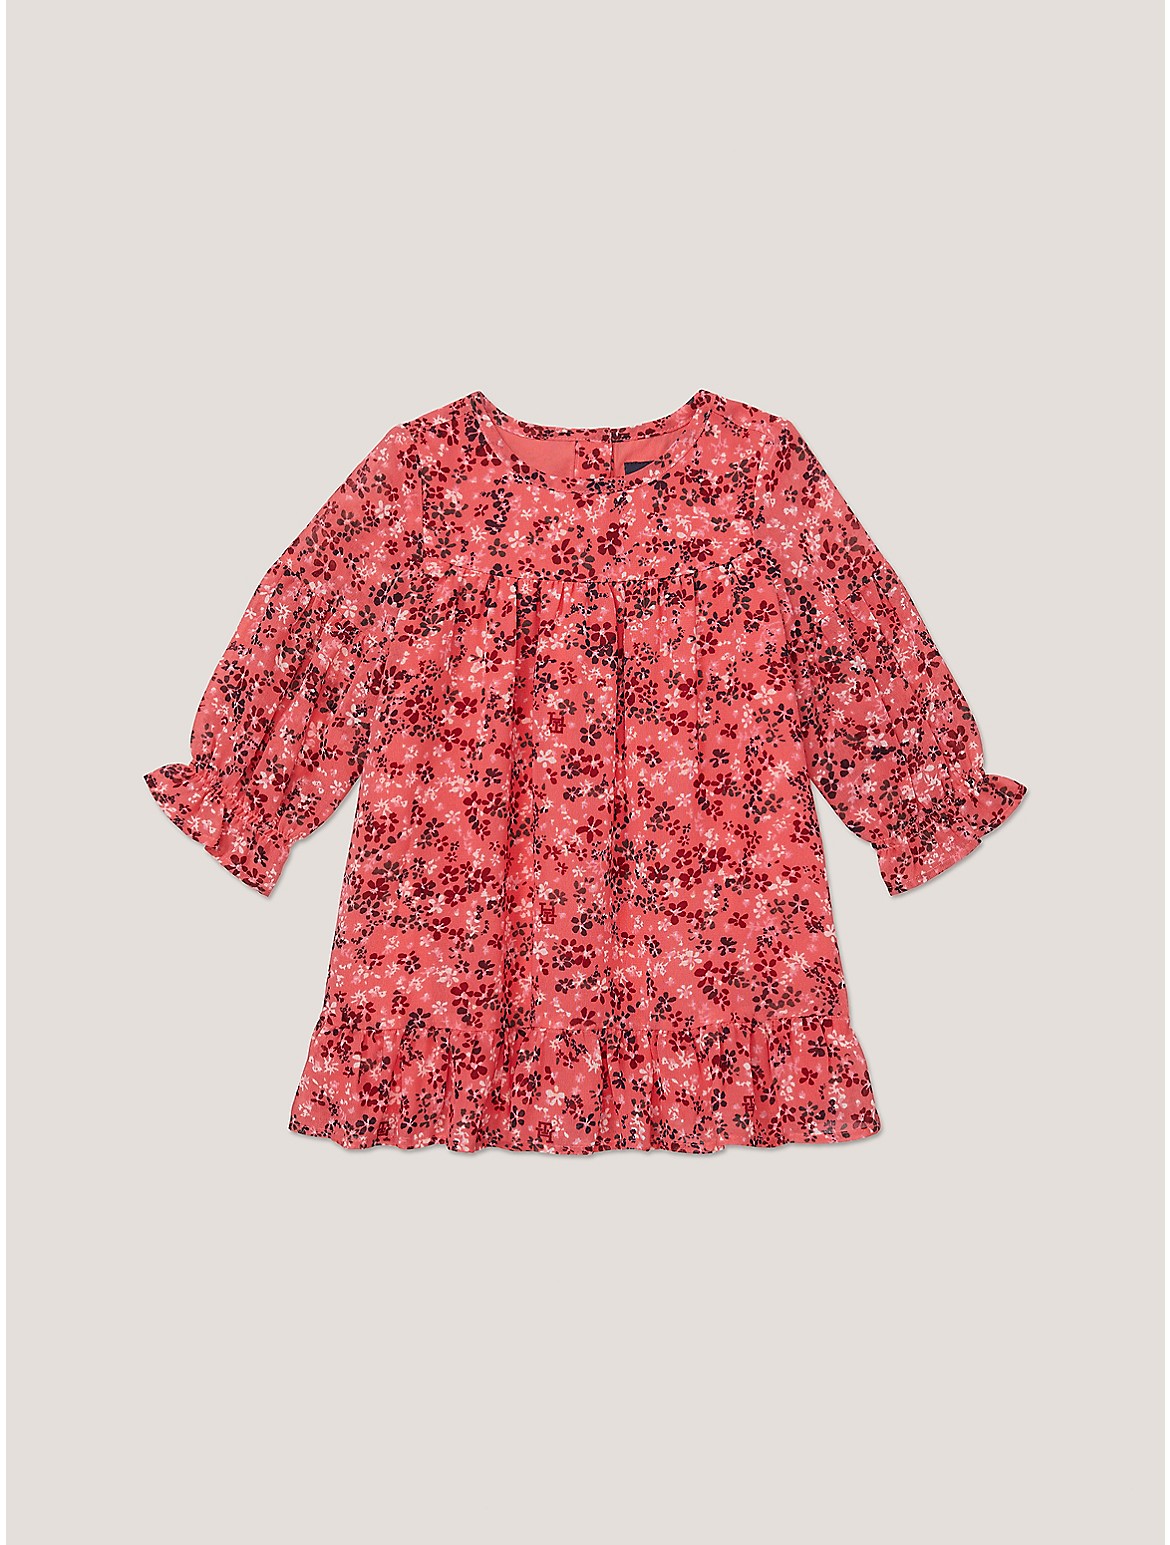 Tommy Hilfiger Girls' Babies' Floral Print Dress - Pink - 24M